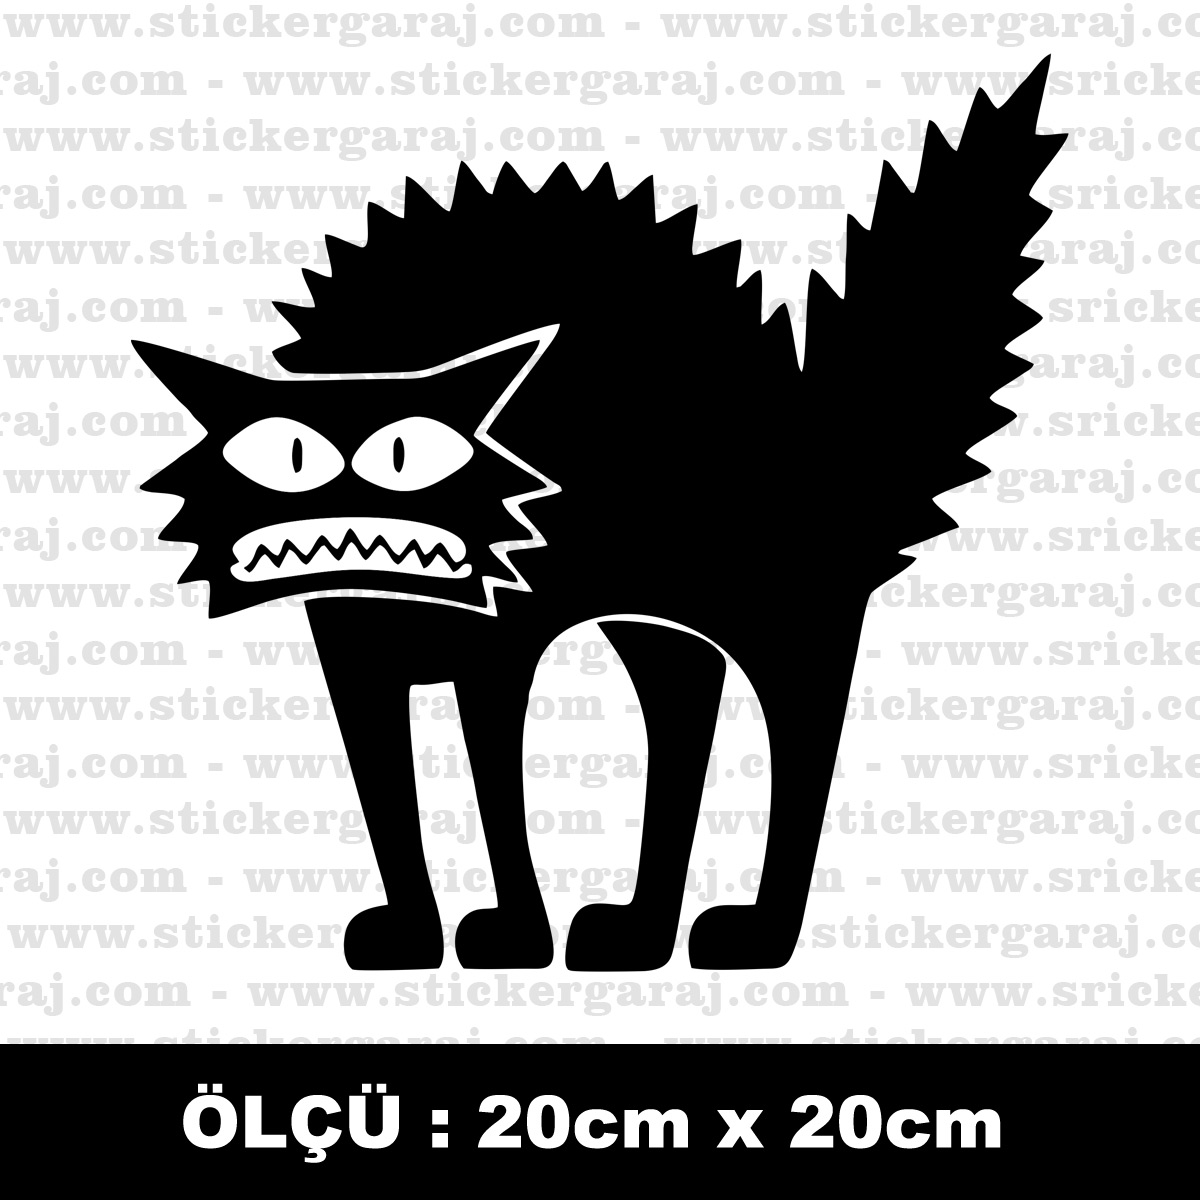 Urkek kedi sticker - Ürkek kedi sticker